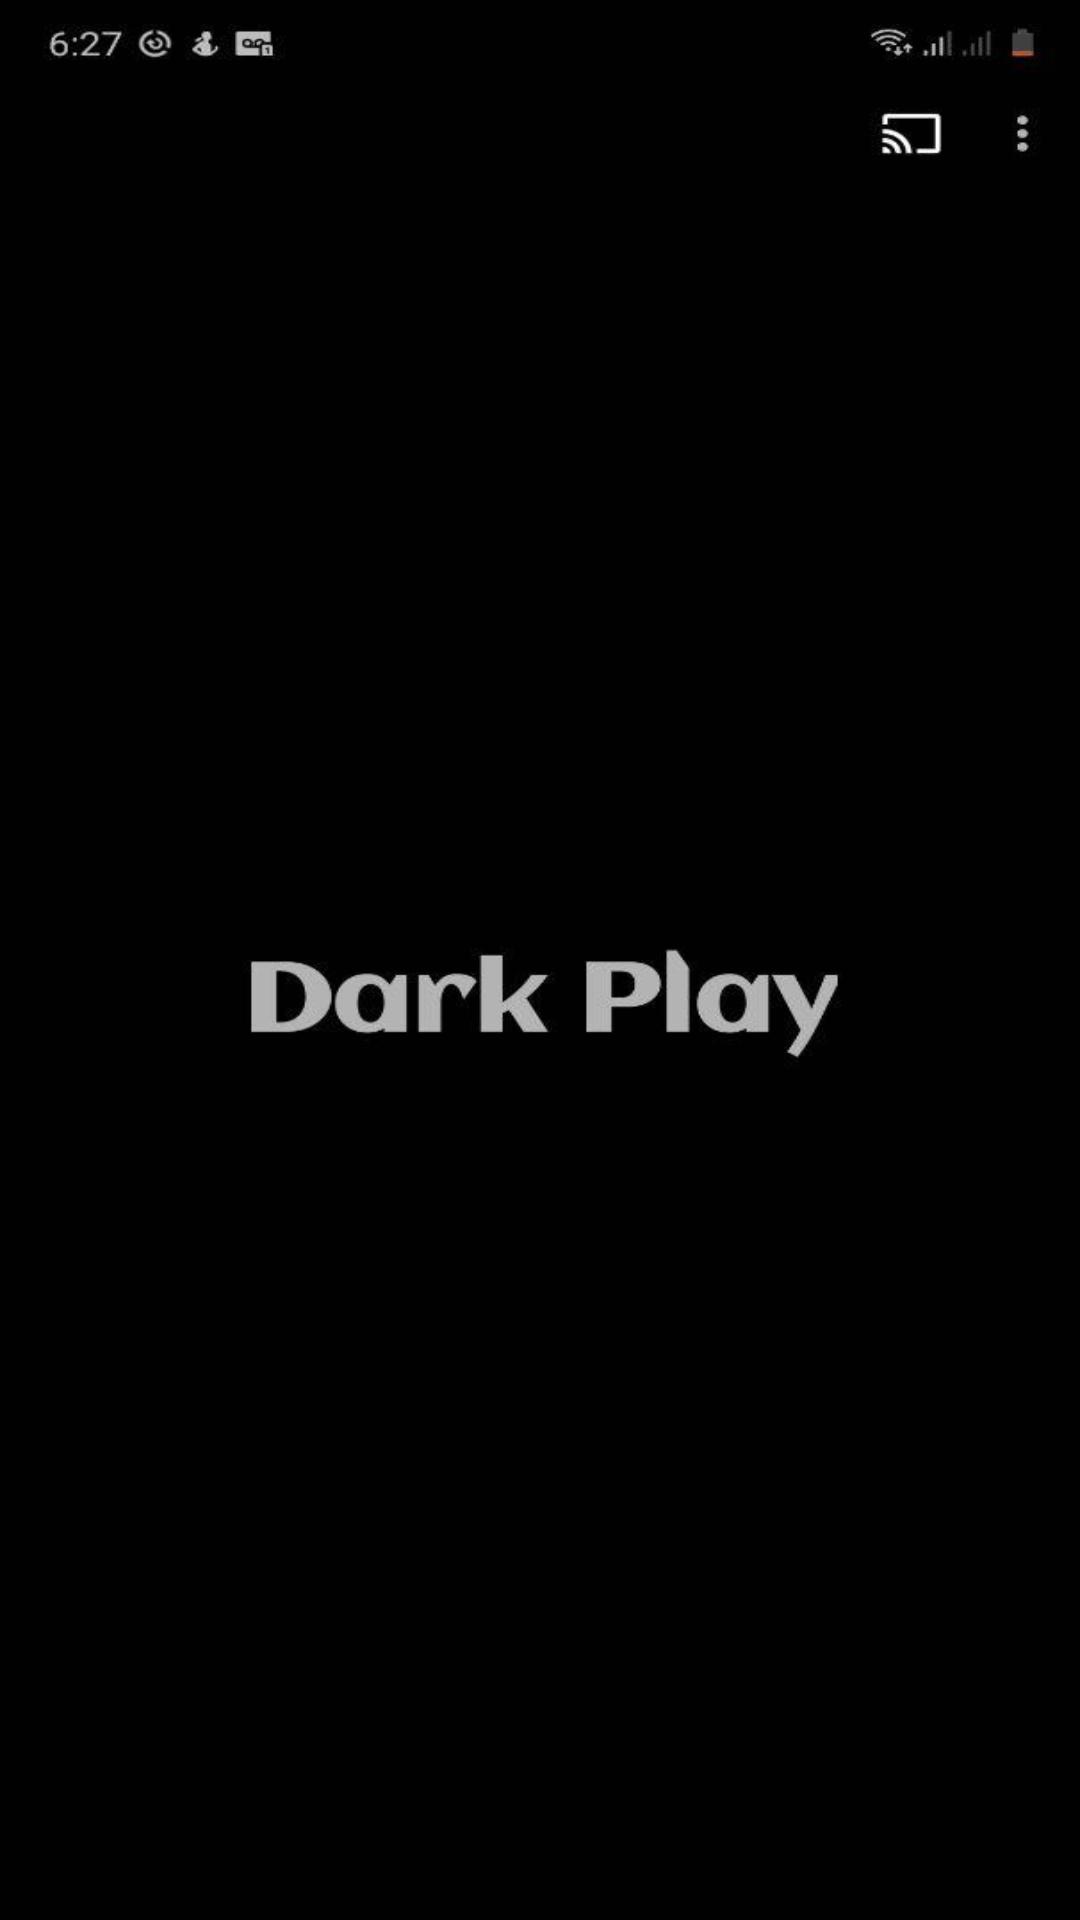 Dark cast